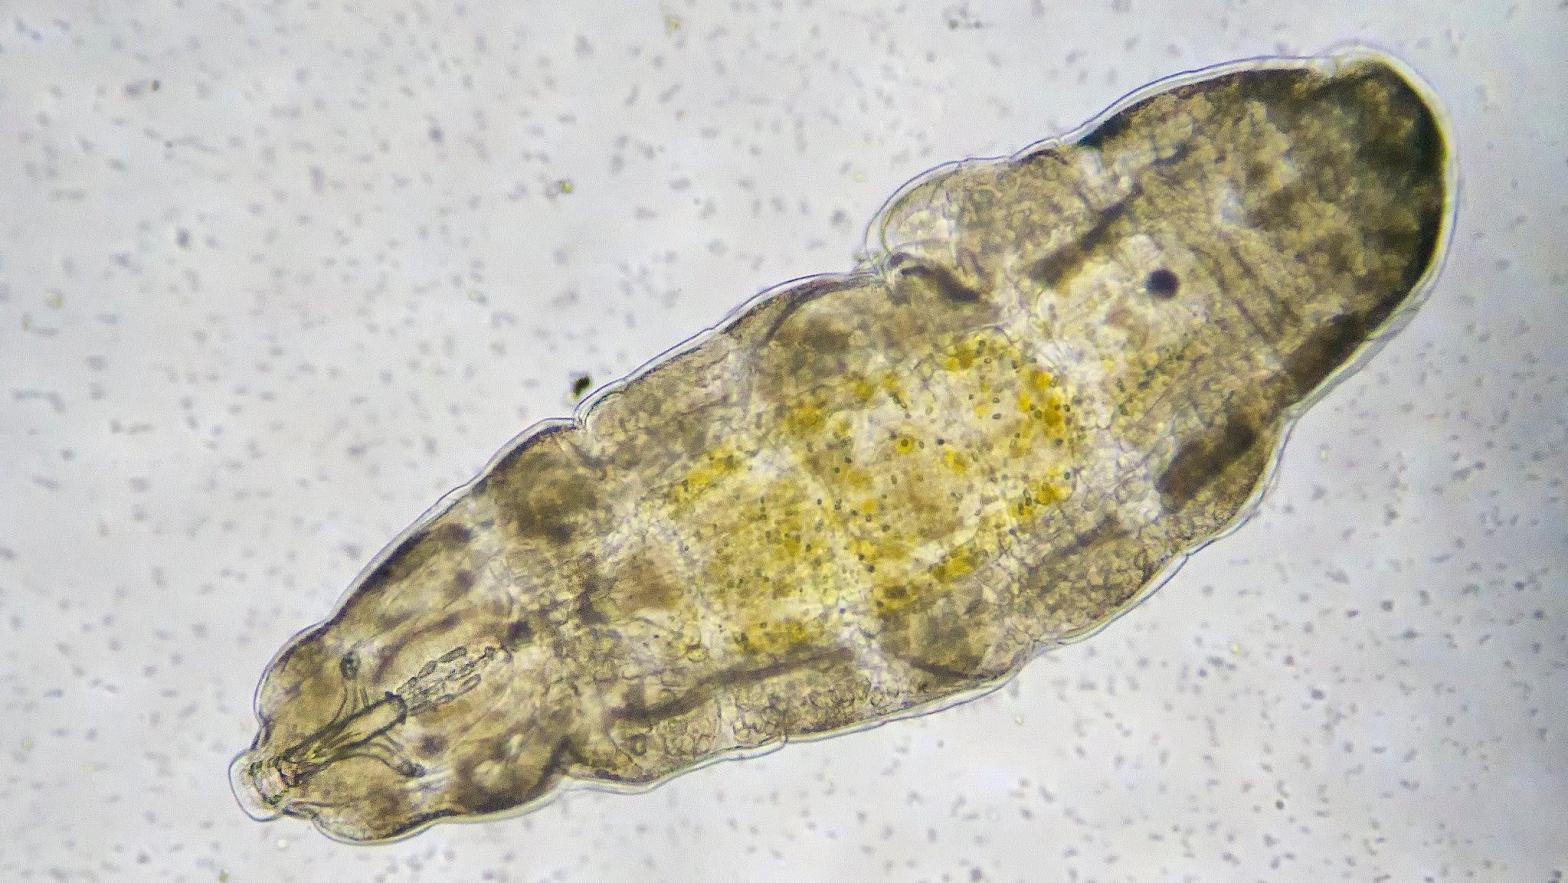 Microscopic image of a tardigrade.  (Image: AJ Cann, Fair Use)